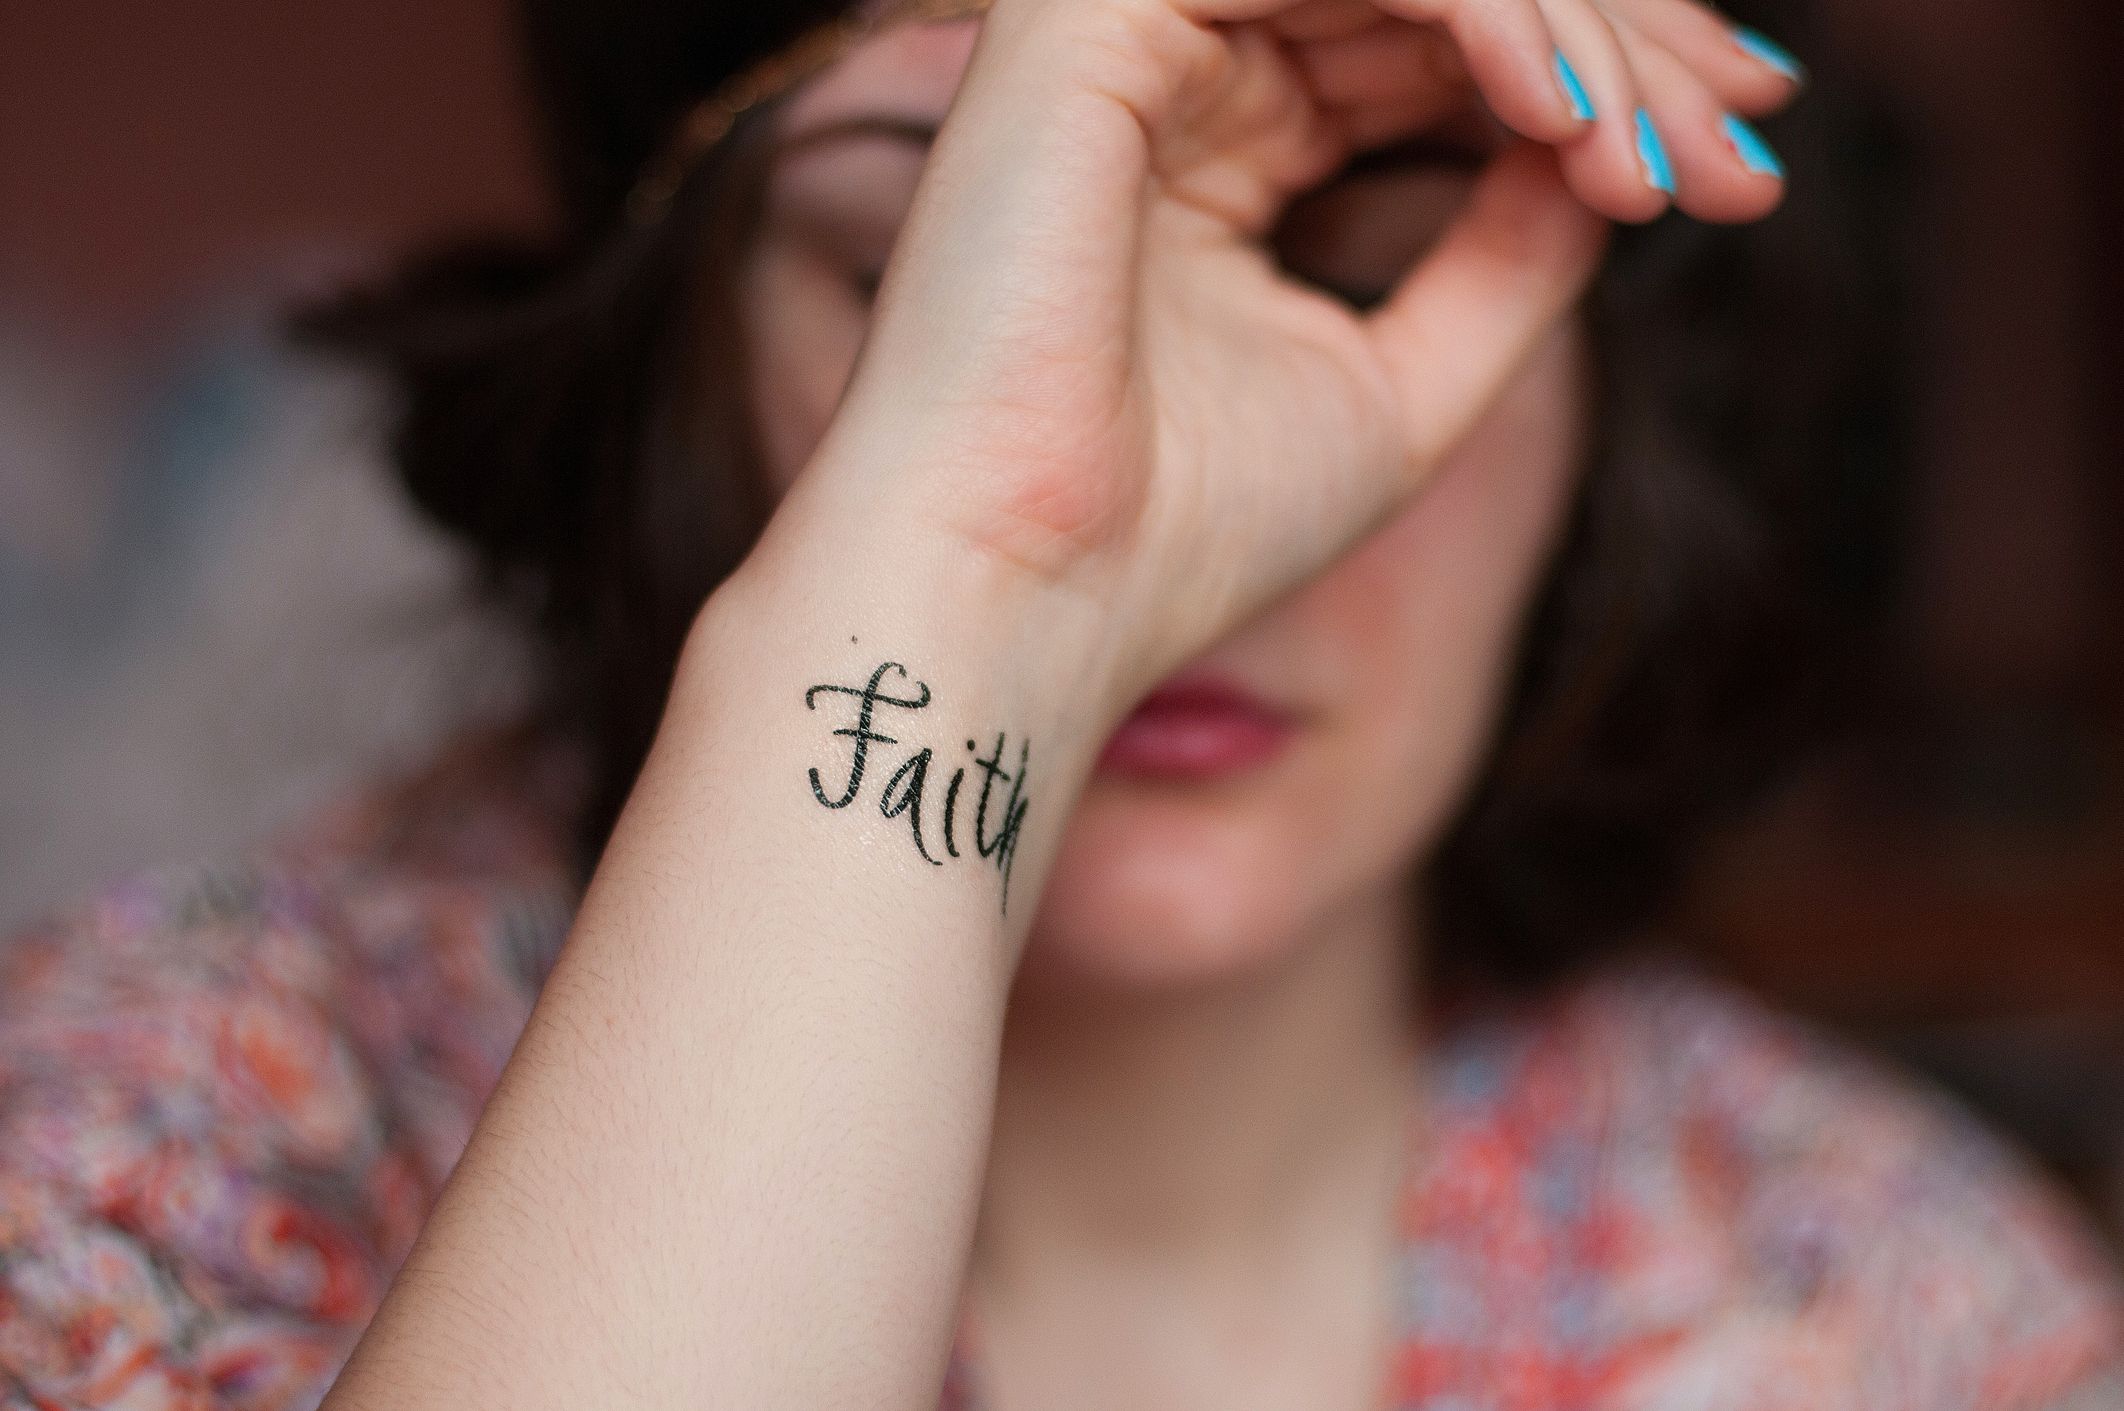 Faith Over the Fear Tattoo: Meaning & Amazing Design Ideas - Tattoo Twist